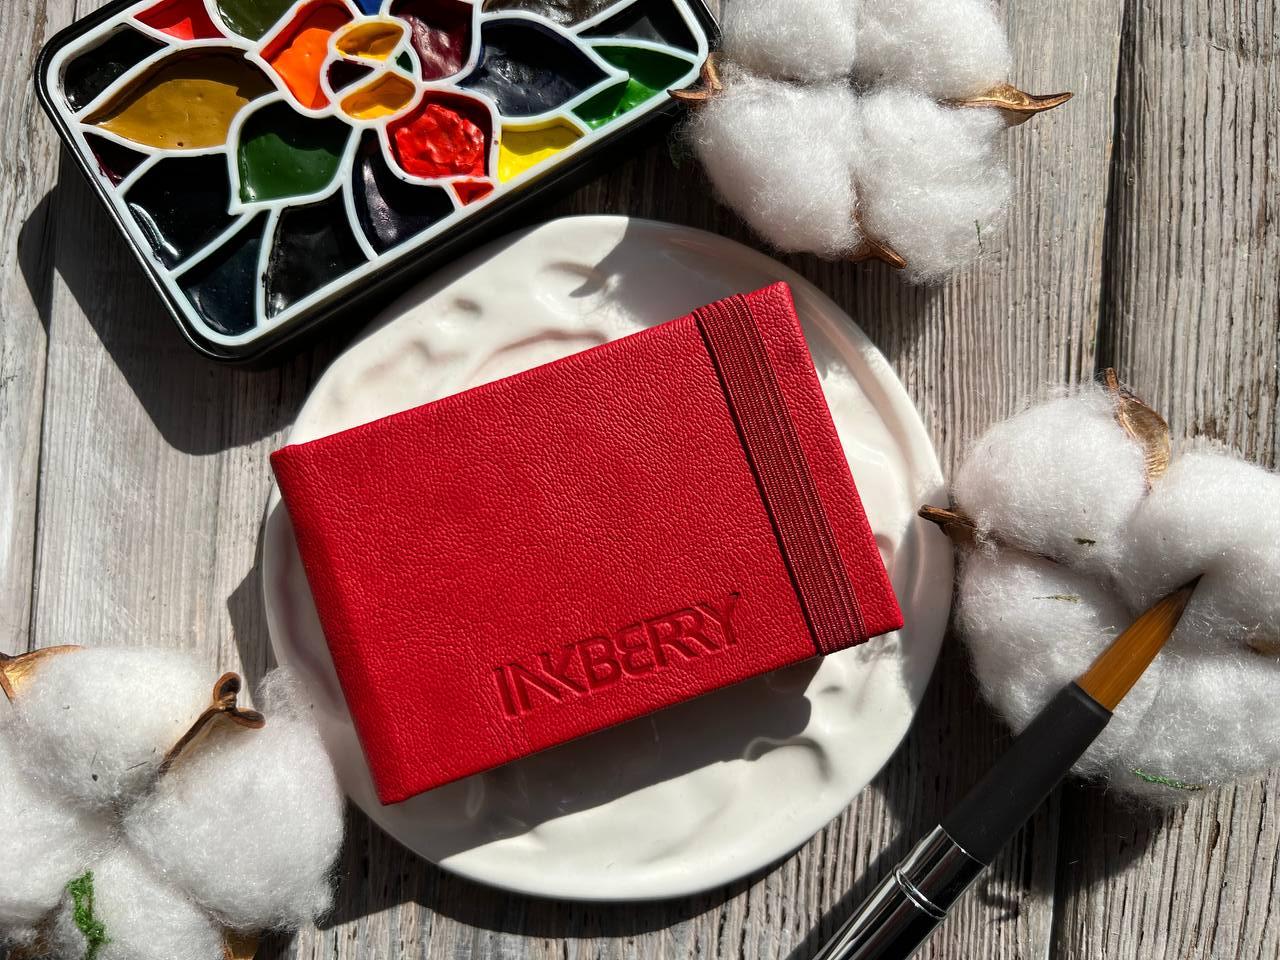 Скетчбук для акварели Inkberry 5х8 см 230 г 50% хлопка, красный скетчбук для для маркеров и графики inkberry 10х10 см 48 л 150 г натурально белая бумага синий